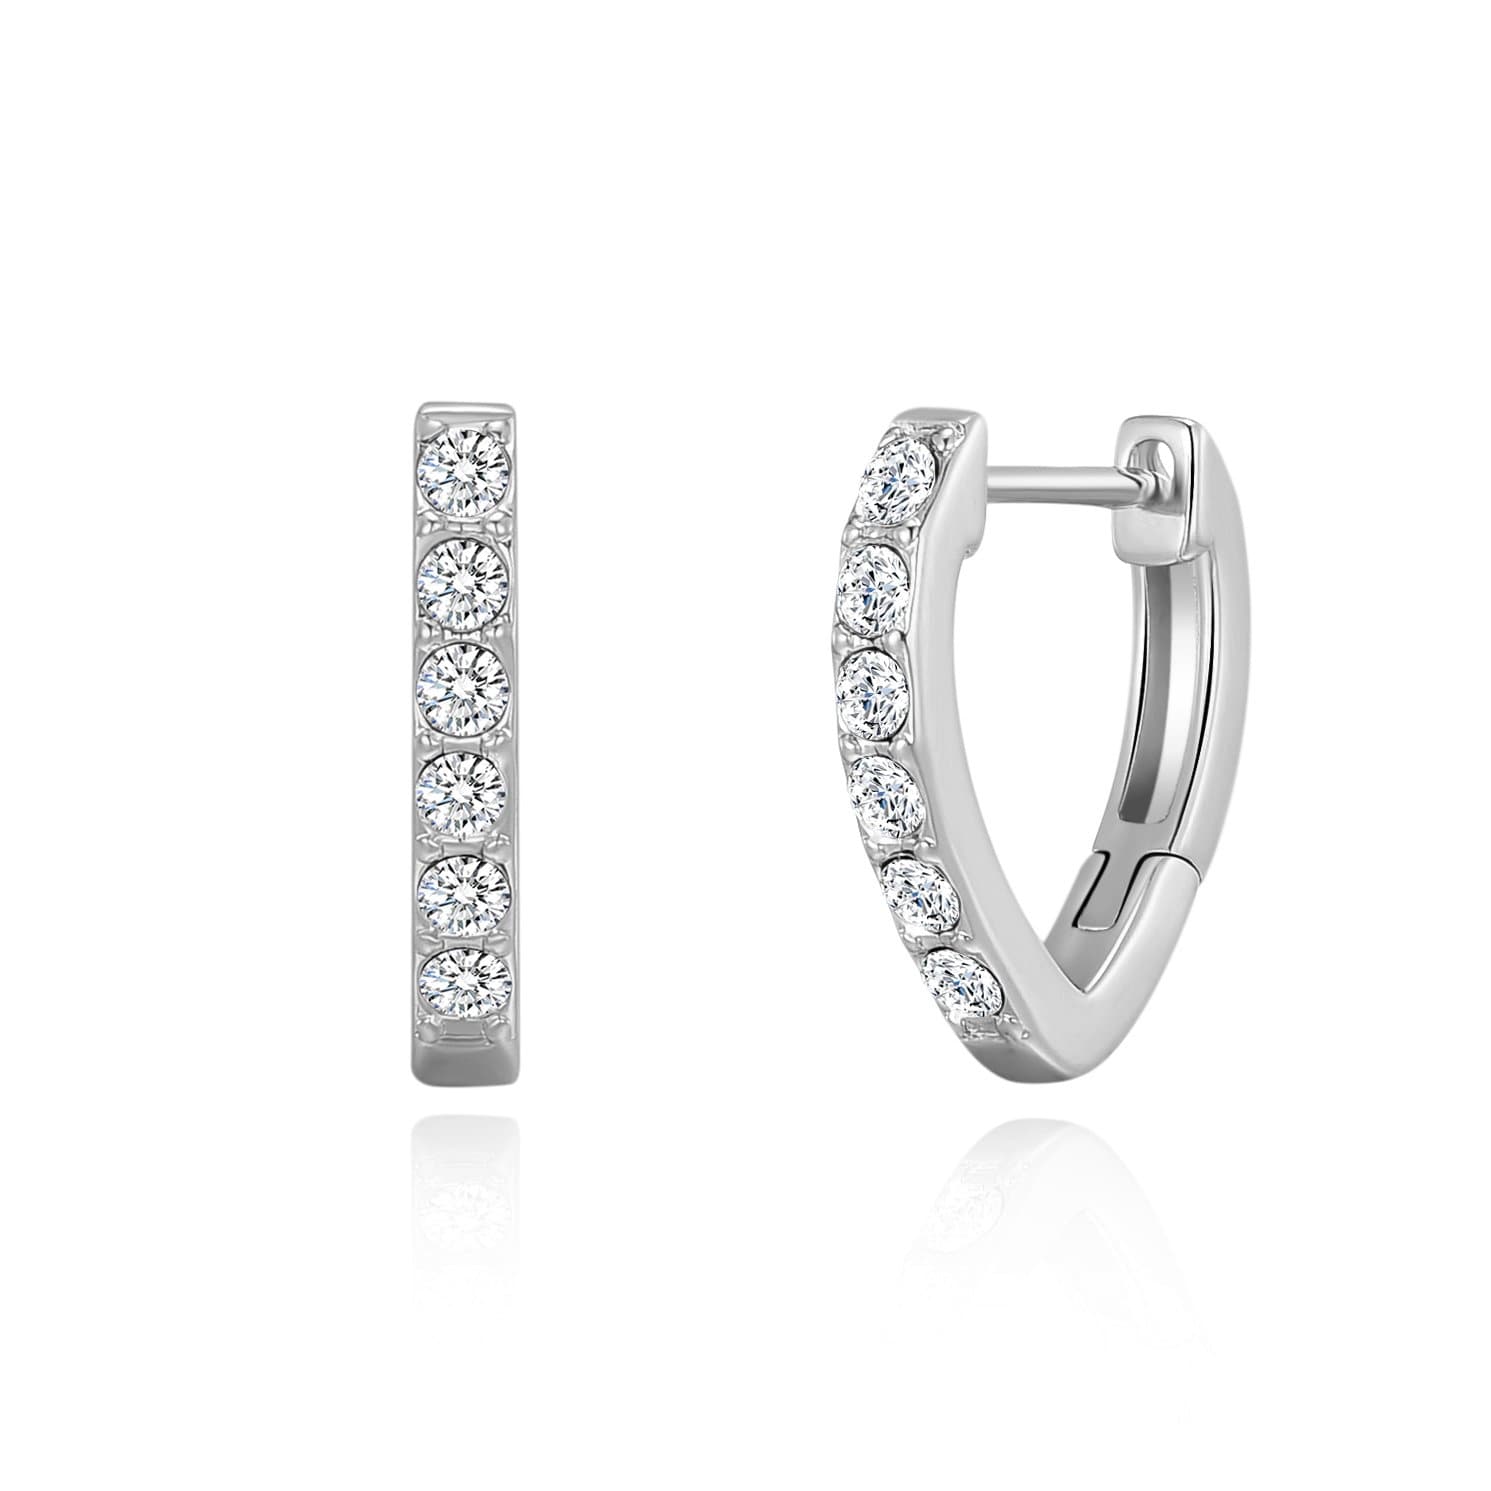 Silver Plated Huggie Hoop Earrings Created with Zircondia® Crystals by Philip Jones Jewellery